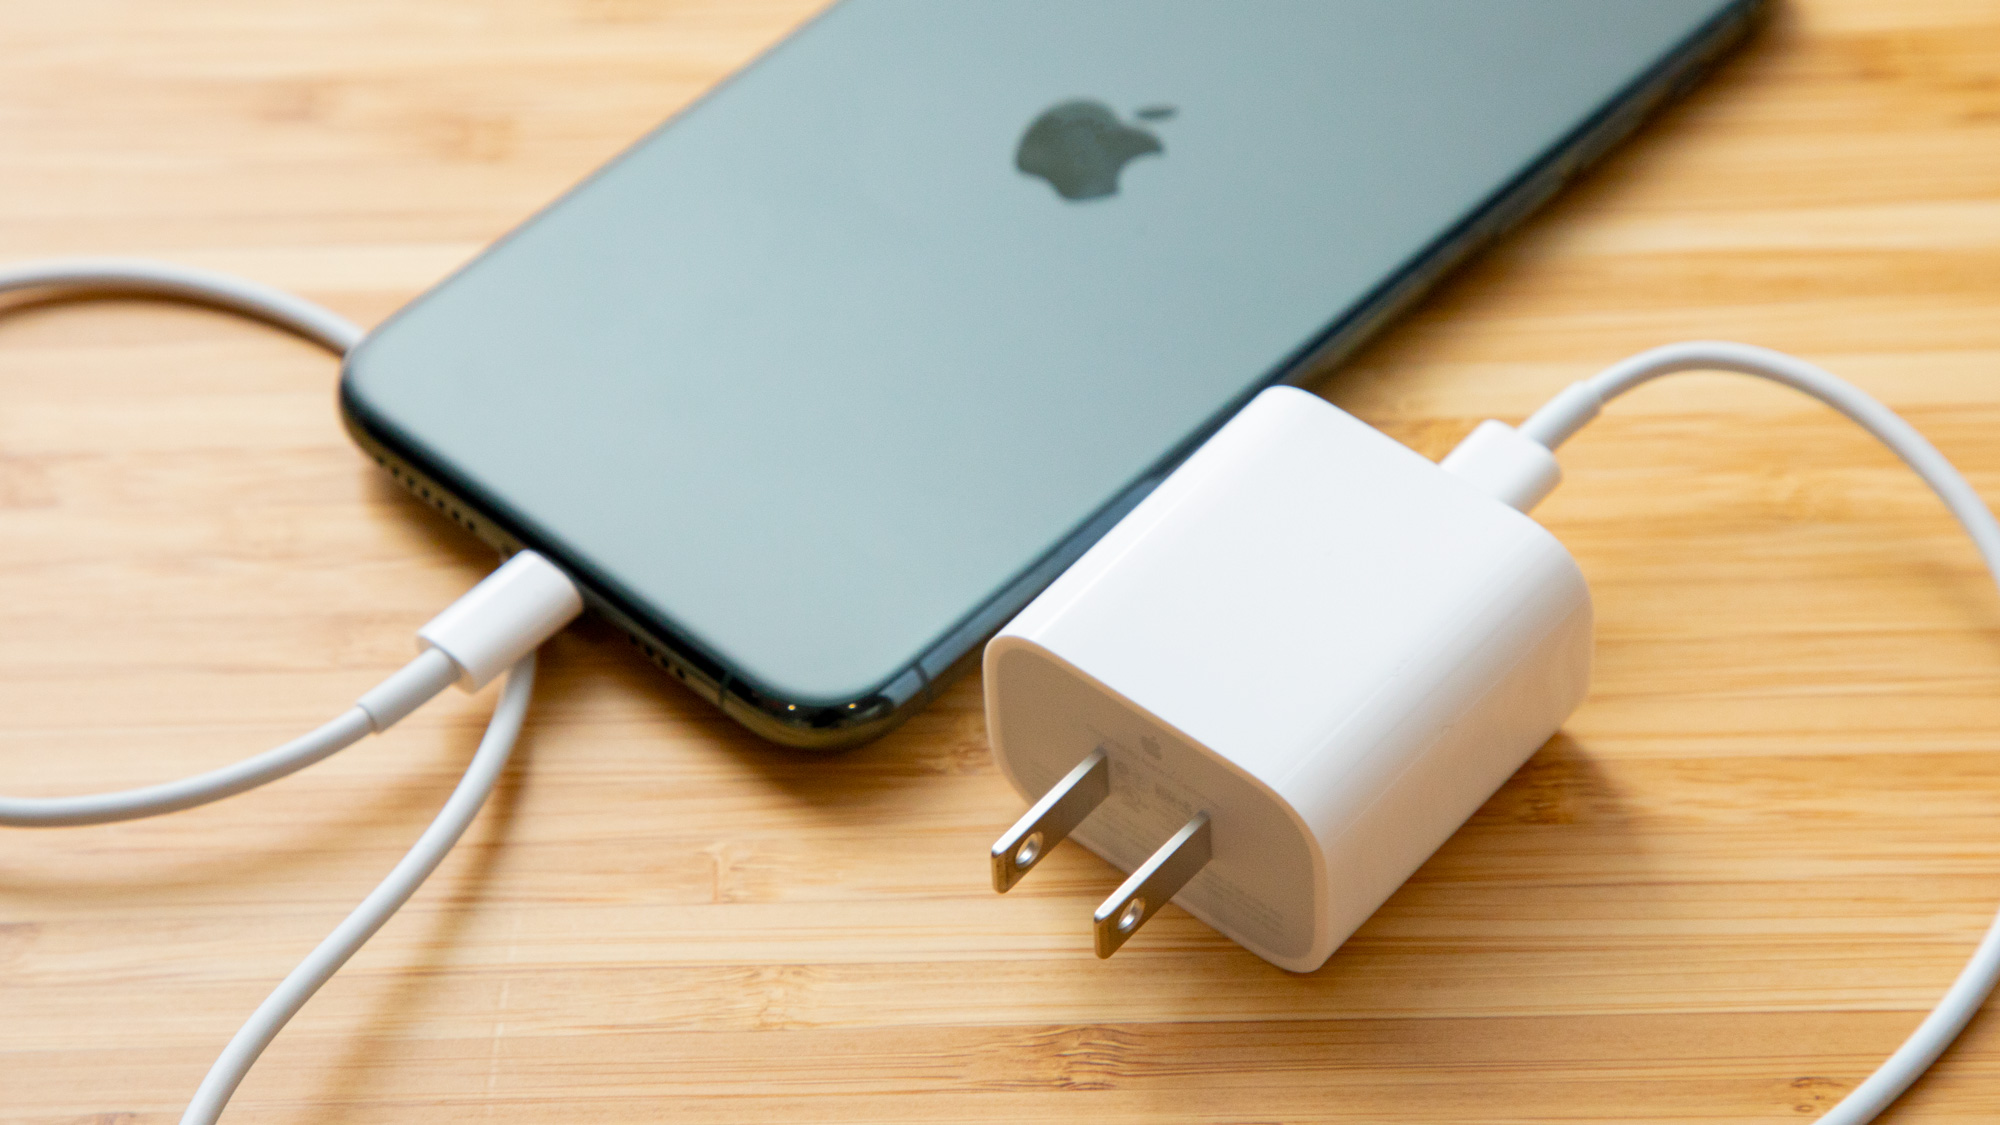 iPhone 11 Pro Max teardown reveals its surprisingly big battery capacity |  TechRadar